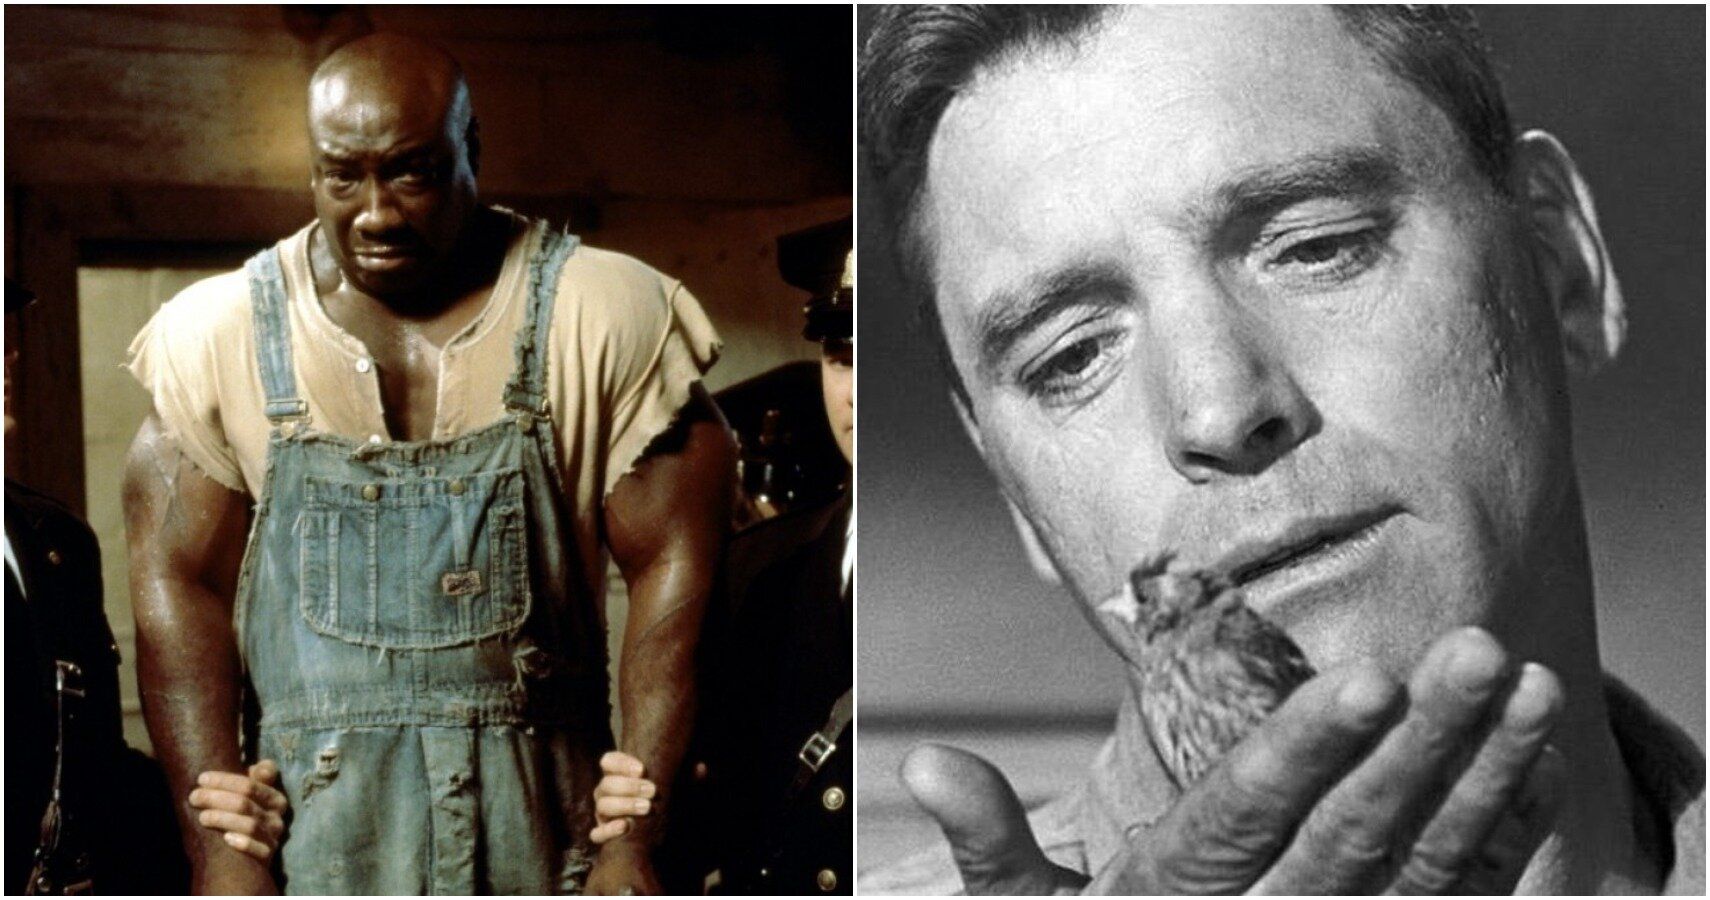 10 Best Prison Movies Ranked (According To IMDb)